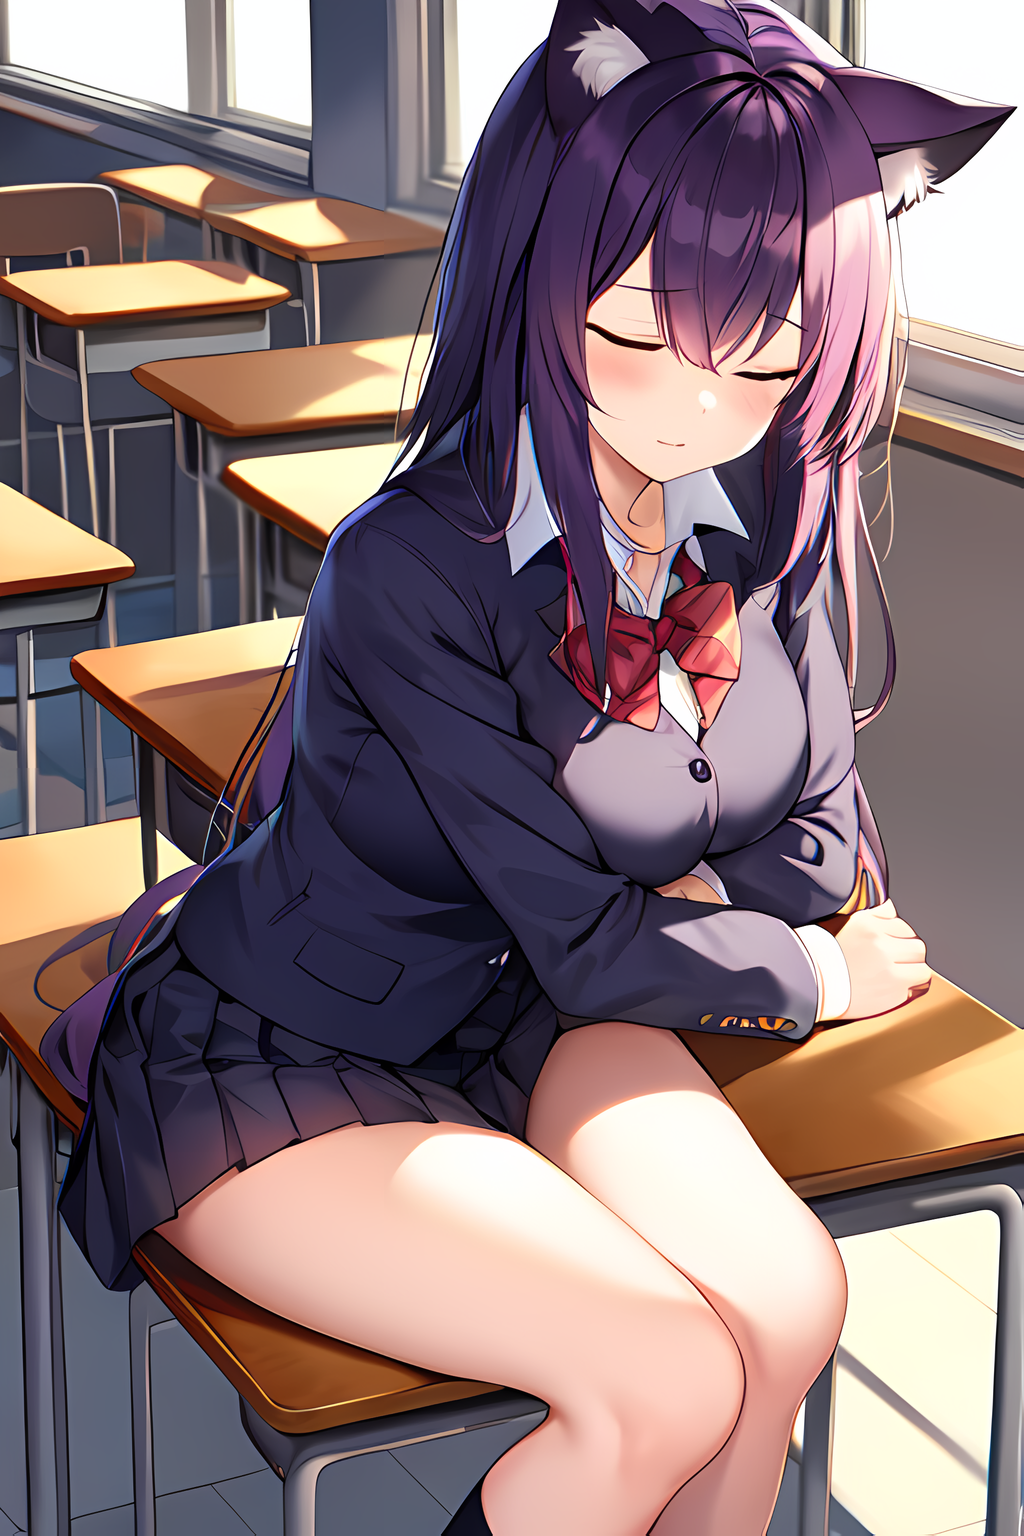 Tired anime girl sleeping on chair with head on desk